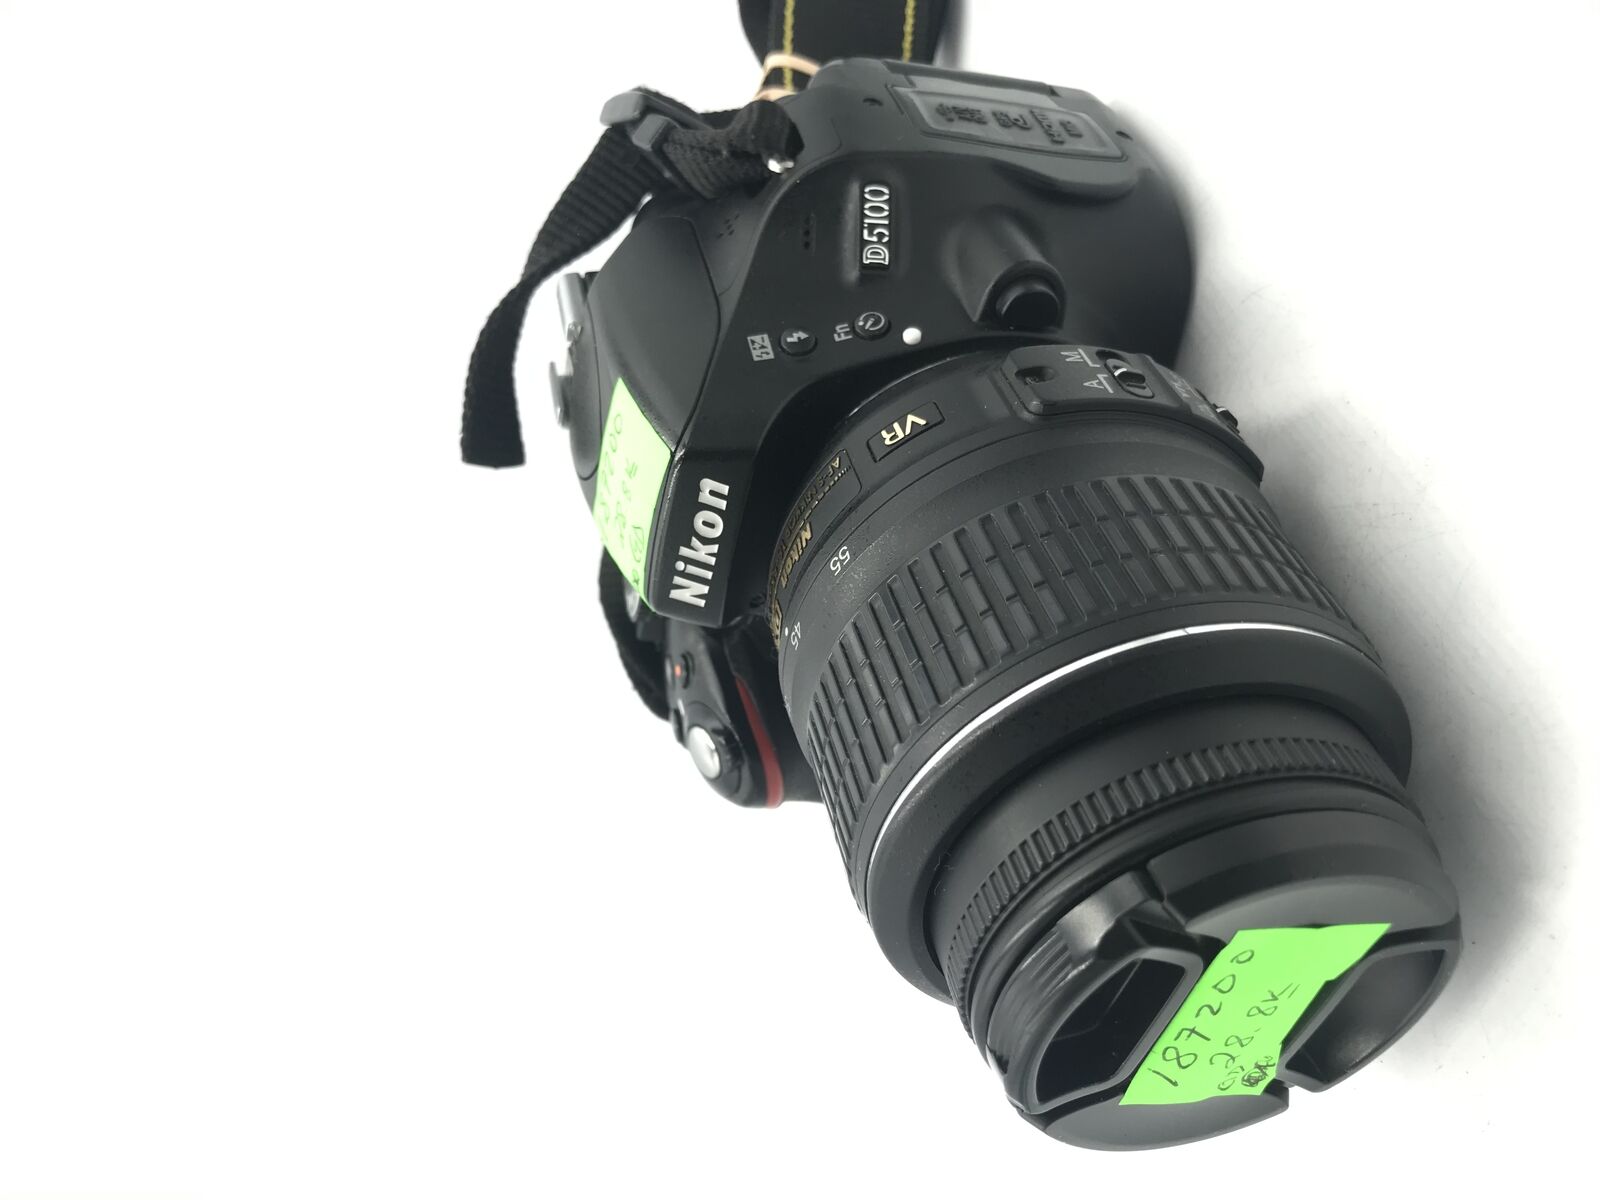 USED Nikon D5100 Digital SLR Kit w/ 18-55mm F3.5-5.6 Lens